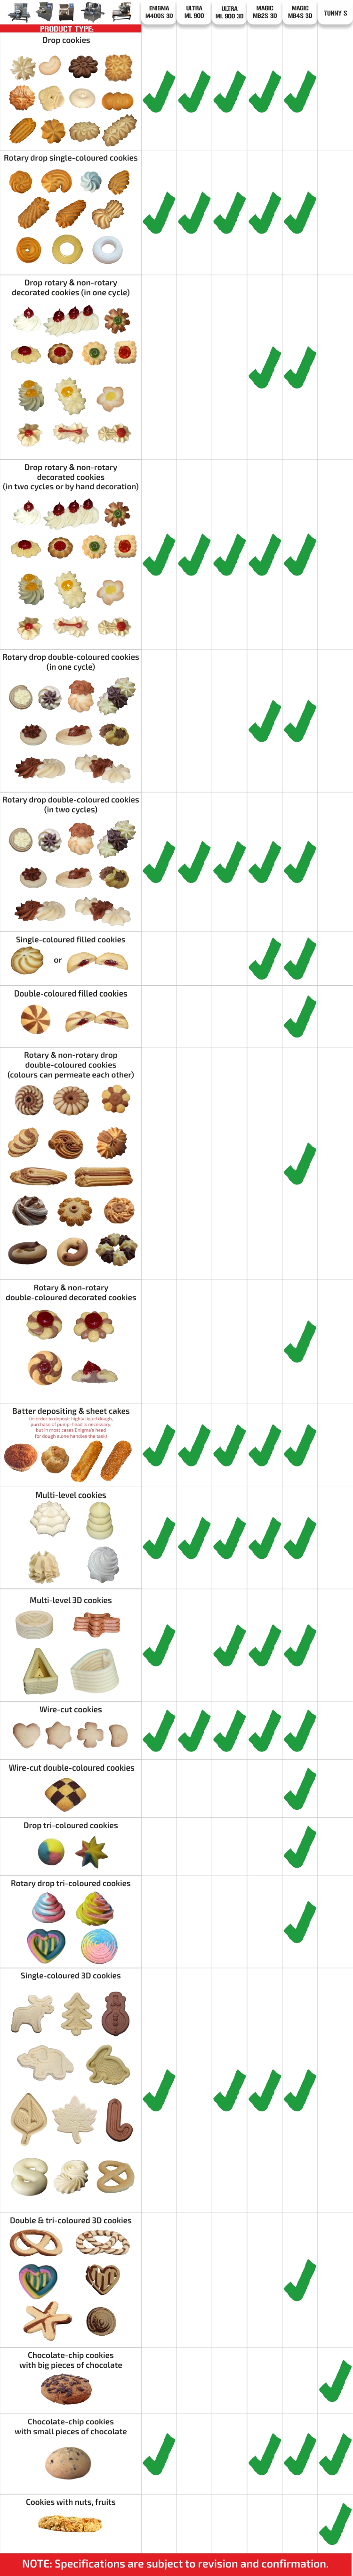 bakery equipment comparison.jpg